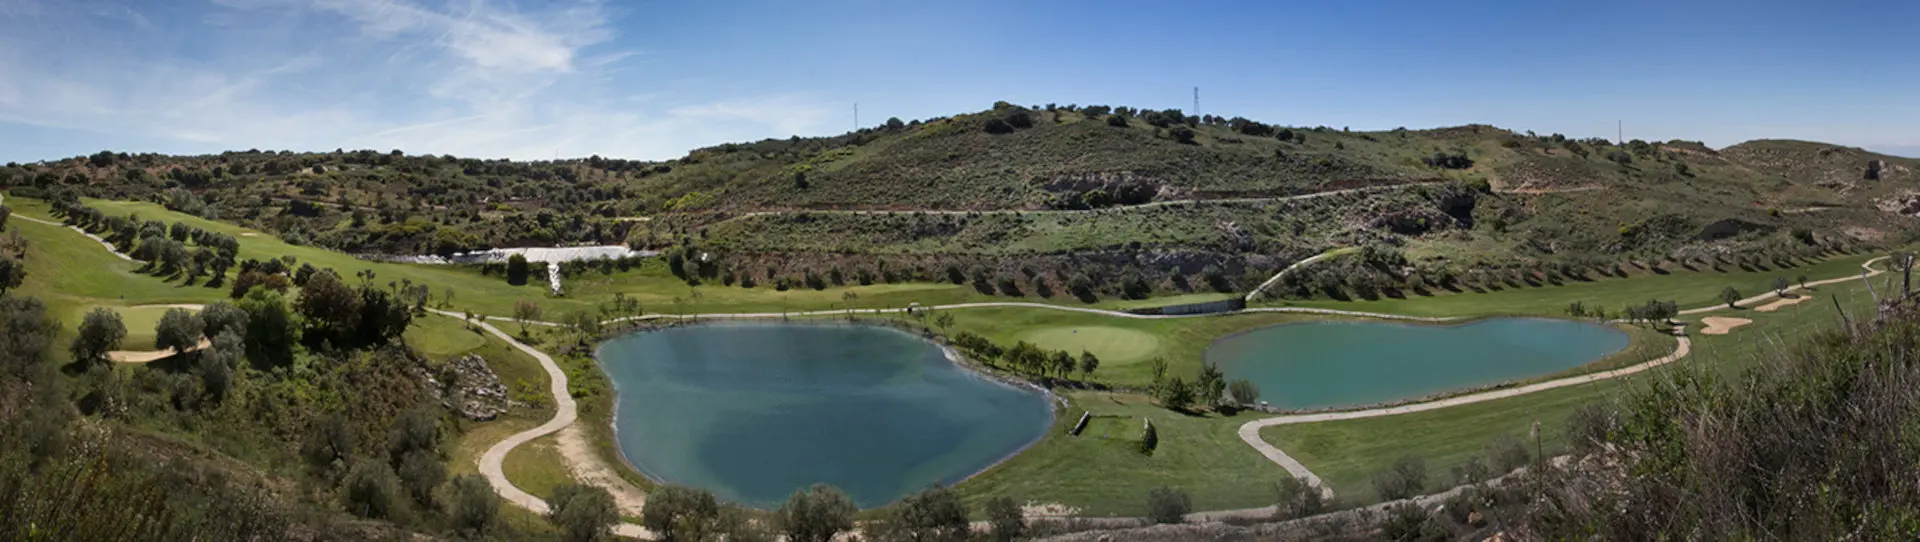 Spain golf courses - Antequera Golf - Photo 2